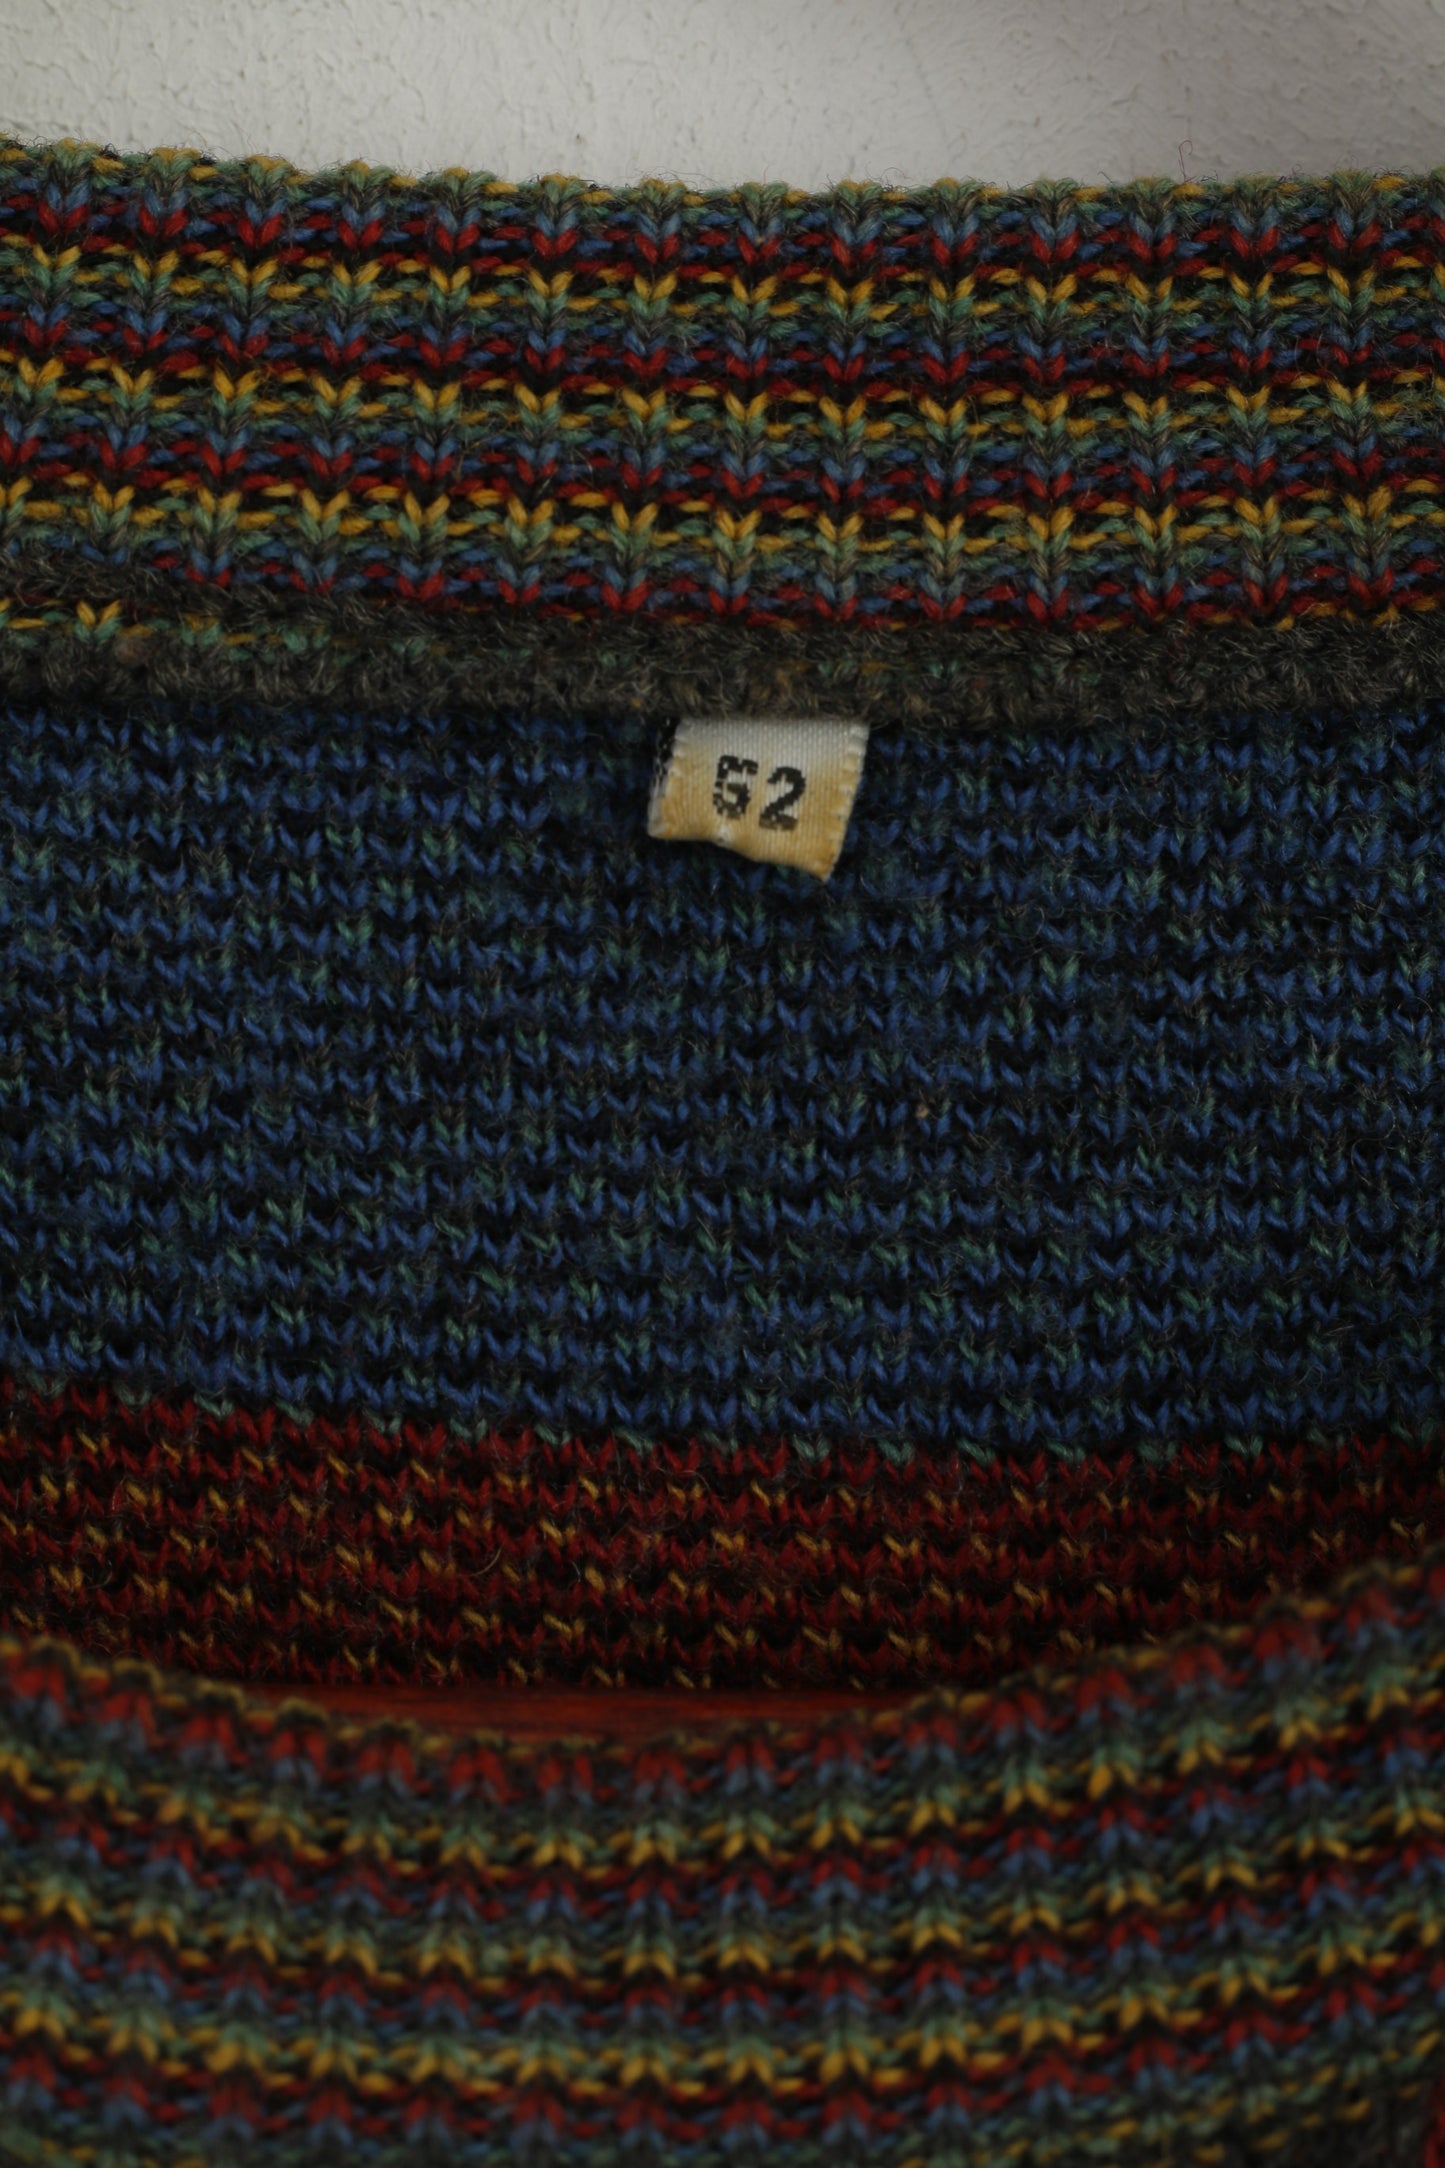 Vintage Men 52 M Jumper Designer Knit Multicoloured Wool Acrylic Blend Sweater